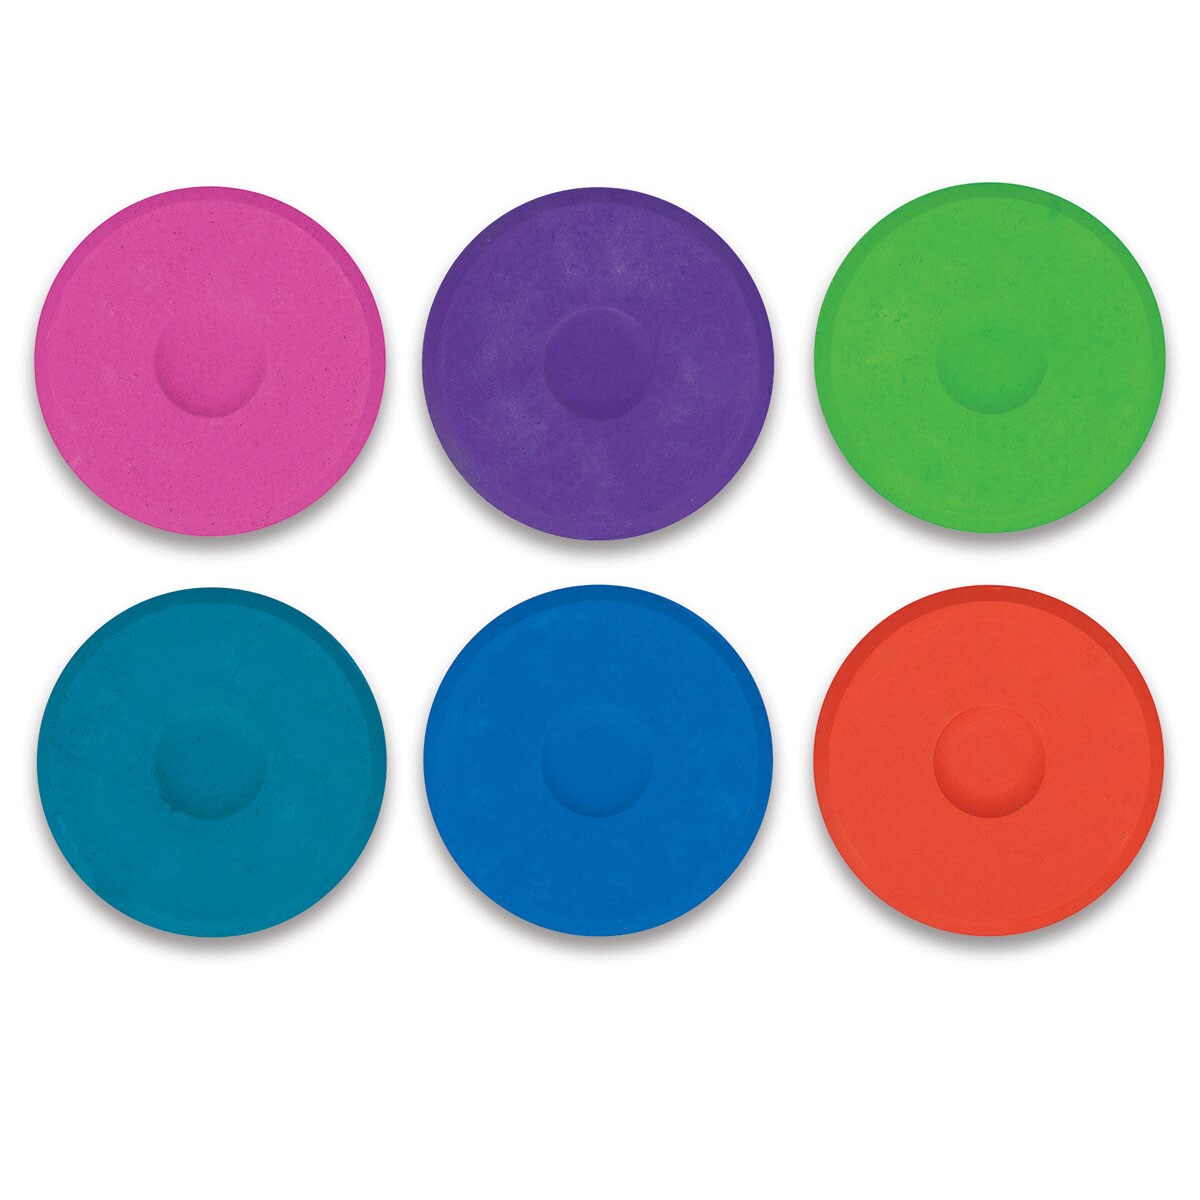 Blick Tempera Cakes - Set of 6, Secondary Colors Refill